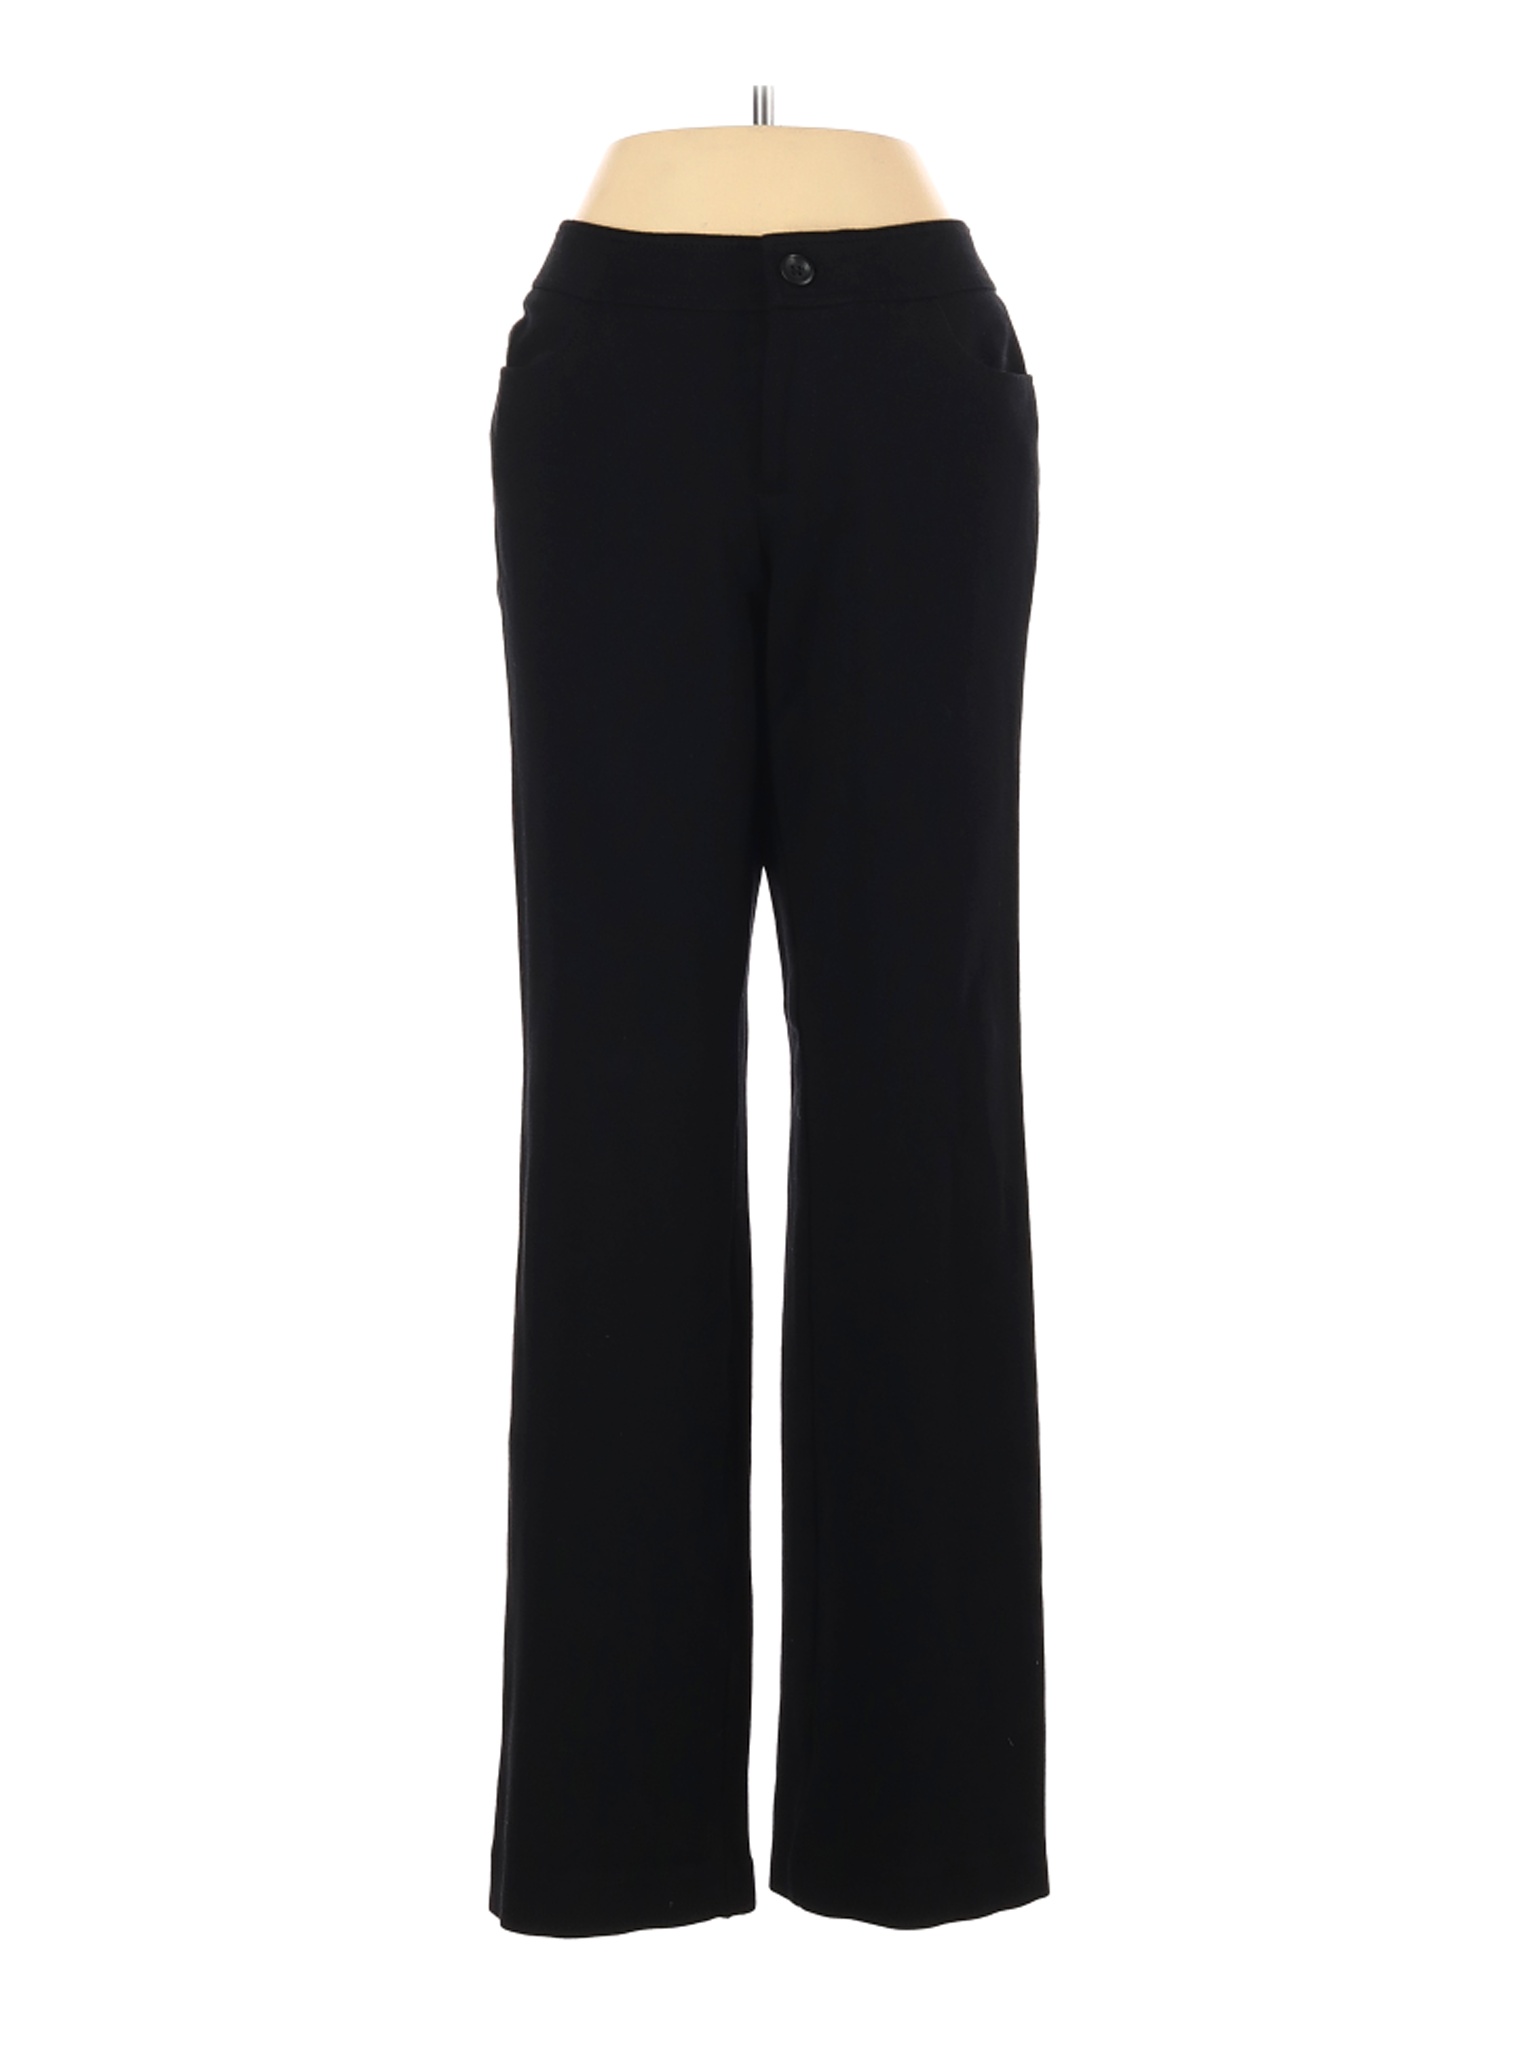 Anne Klein Women Black Dress Pants 6 | eBay